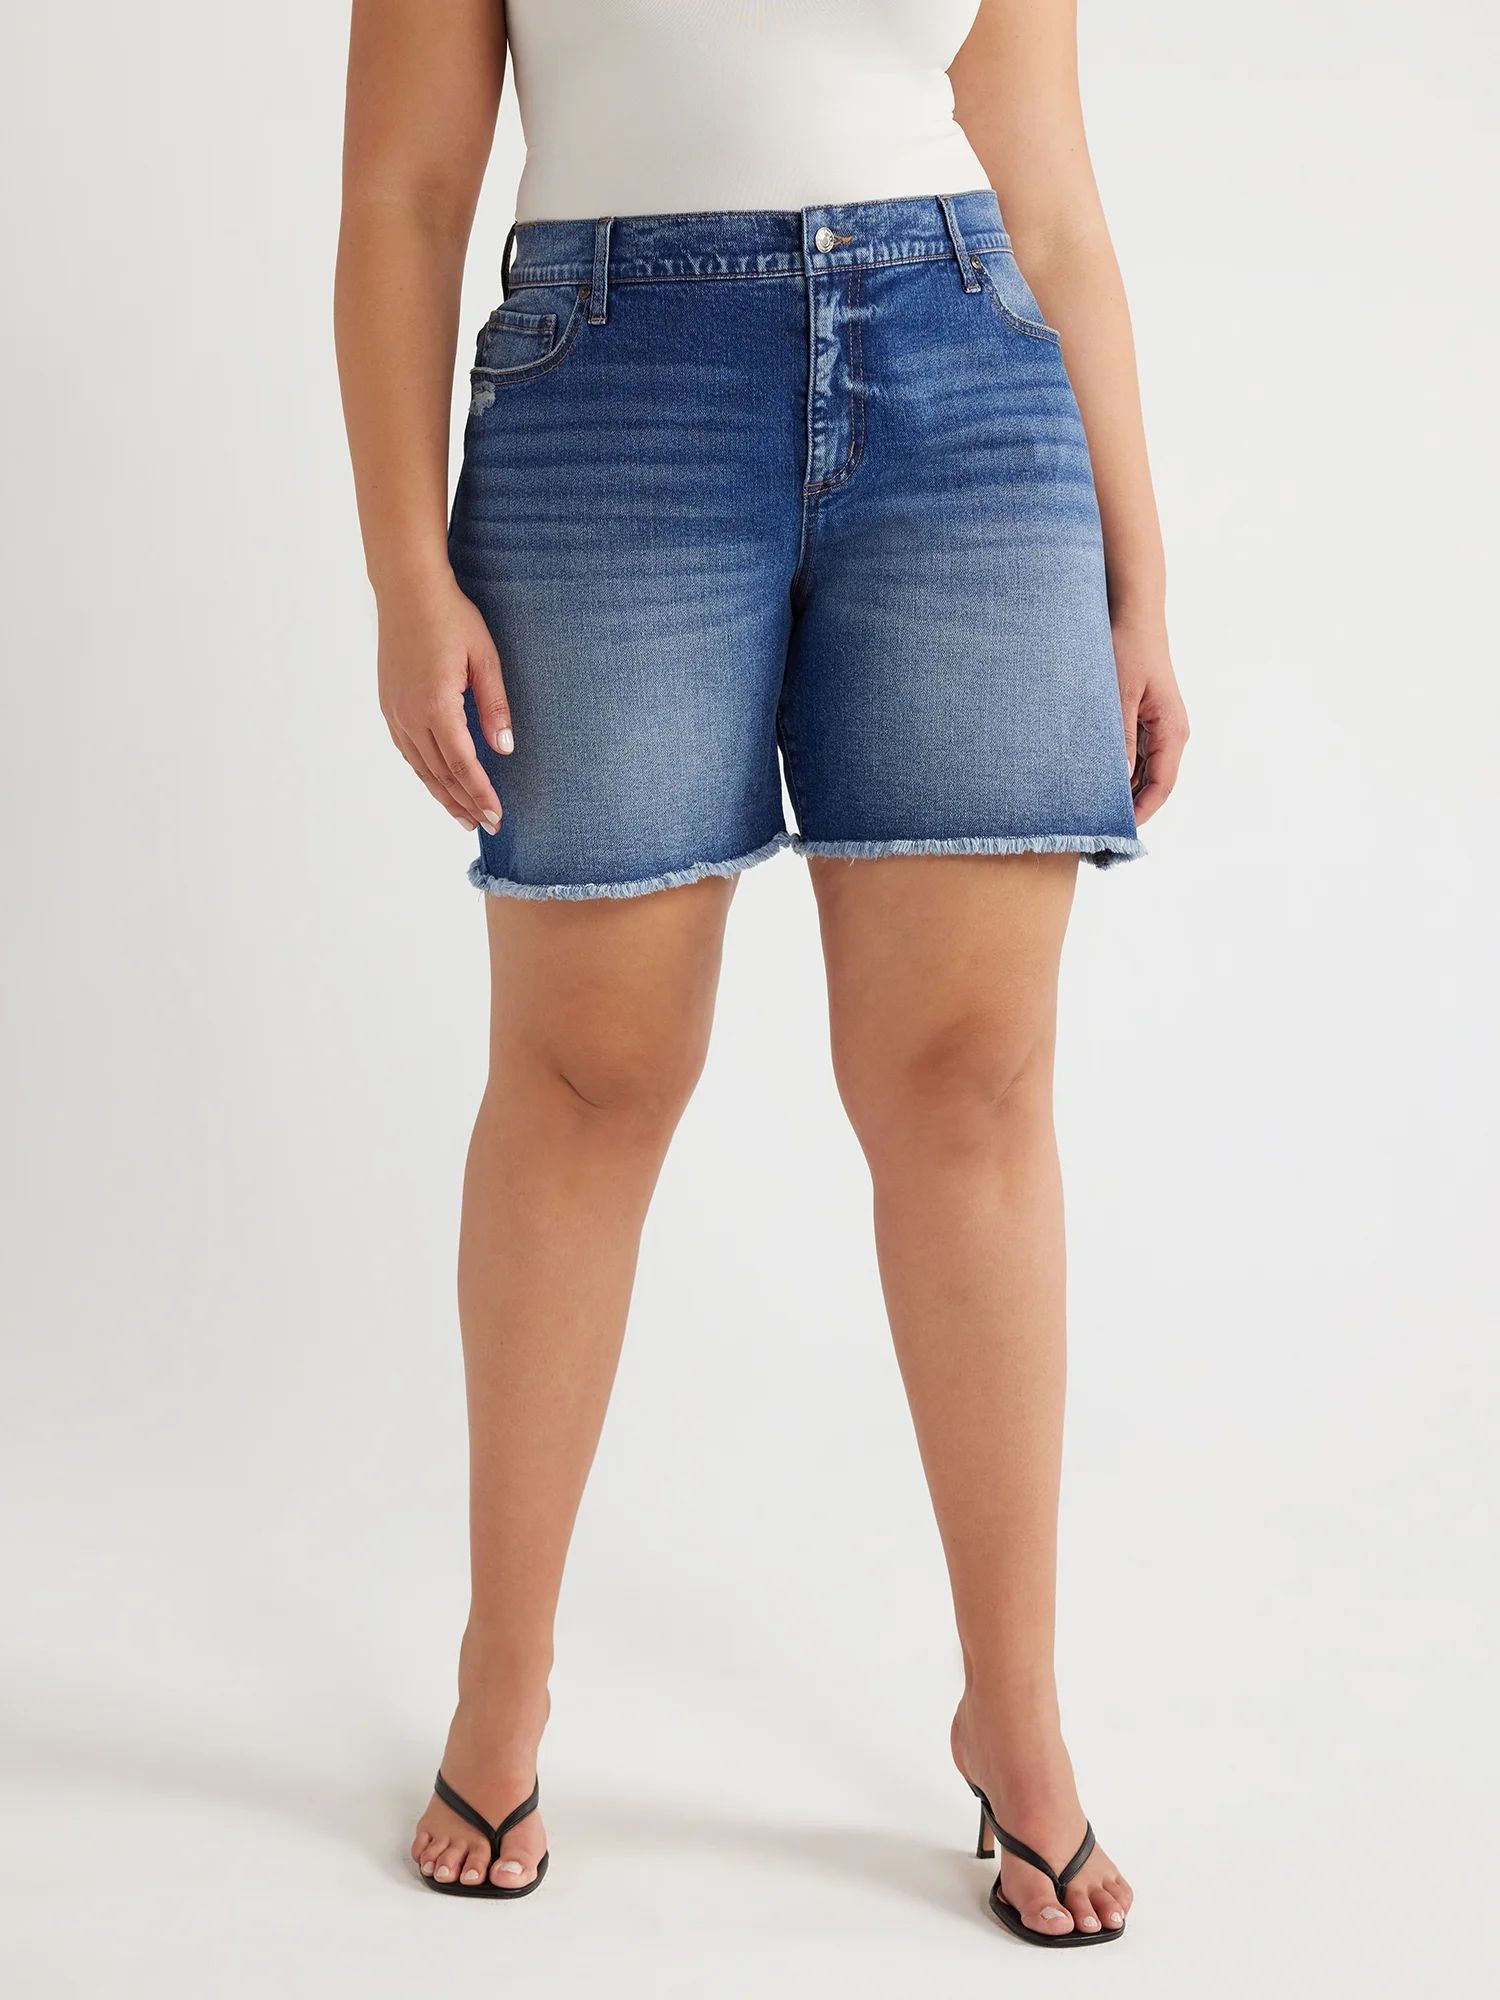 Sofia Jeans Women's Plus Size Gabriella Mid Rise Frayed Hem Bermuda Shorts, 7" Inseam, Sizes 14W-... | Walmart (US)